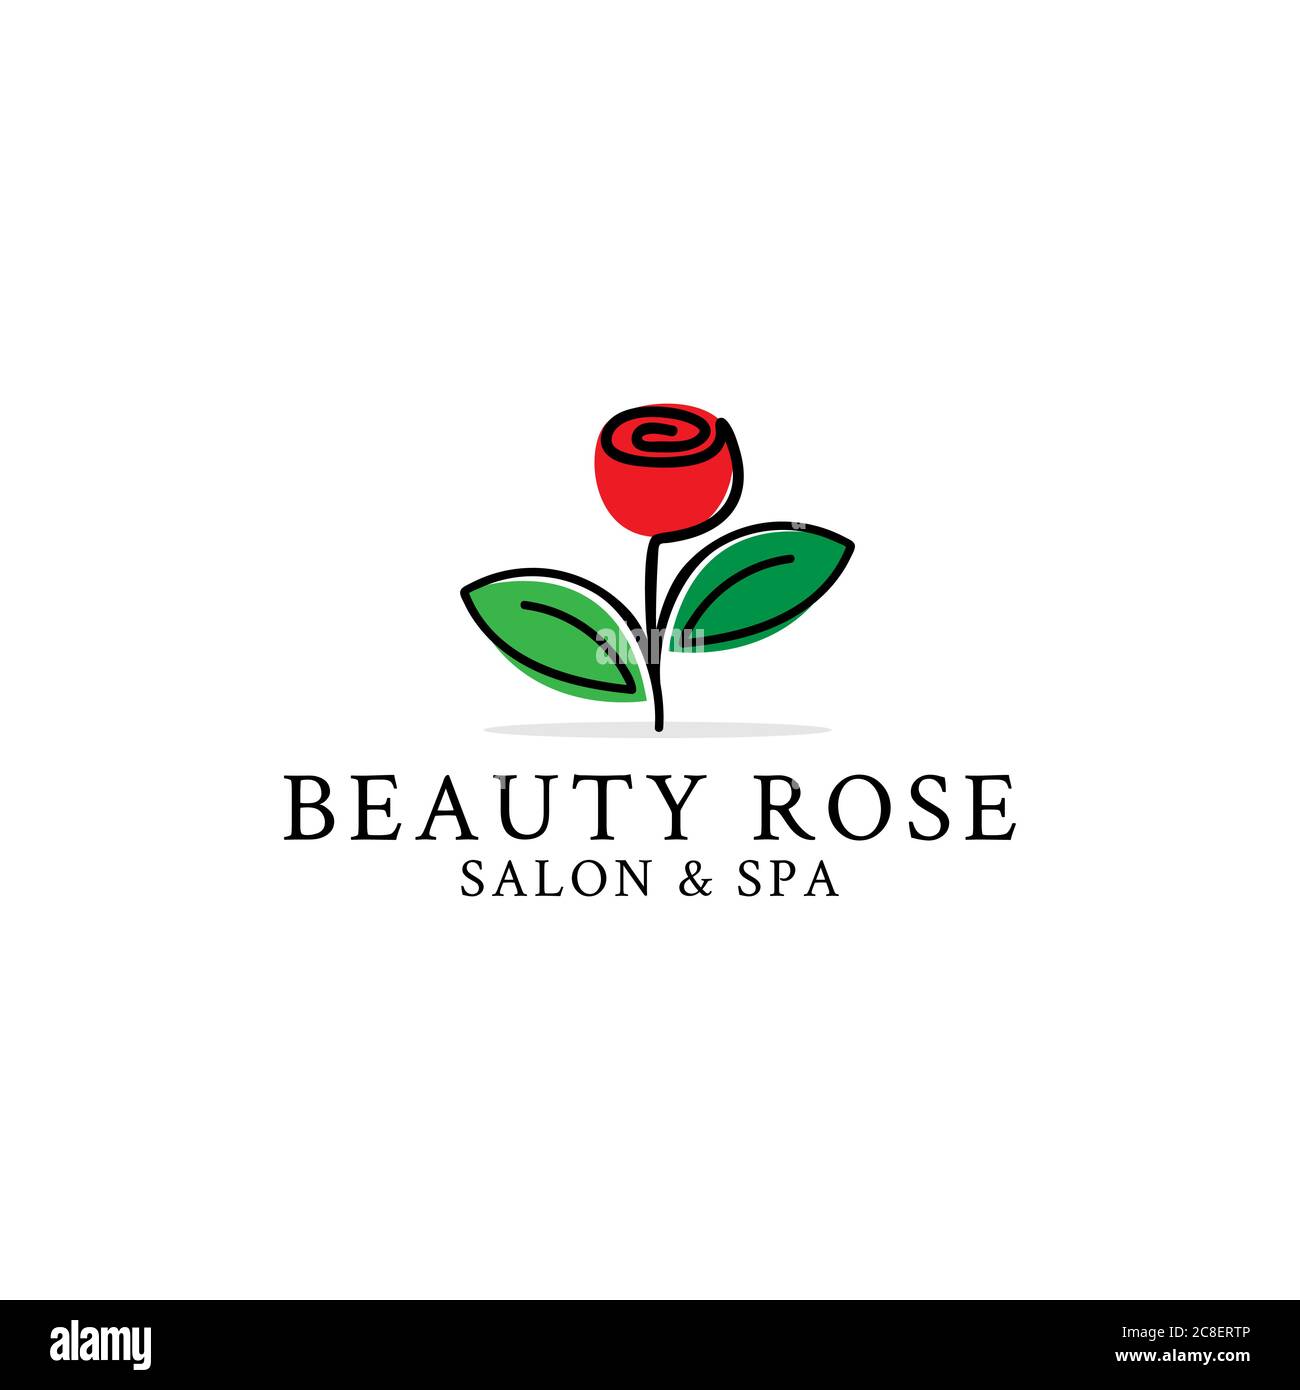 Beauty rose salon and spa logo design inspirations, Vector female beauty fashion logo design template Stock Vector